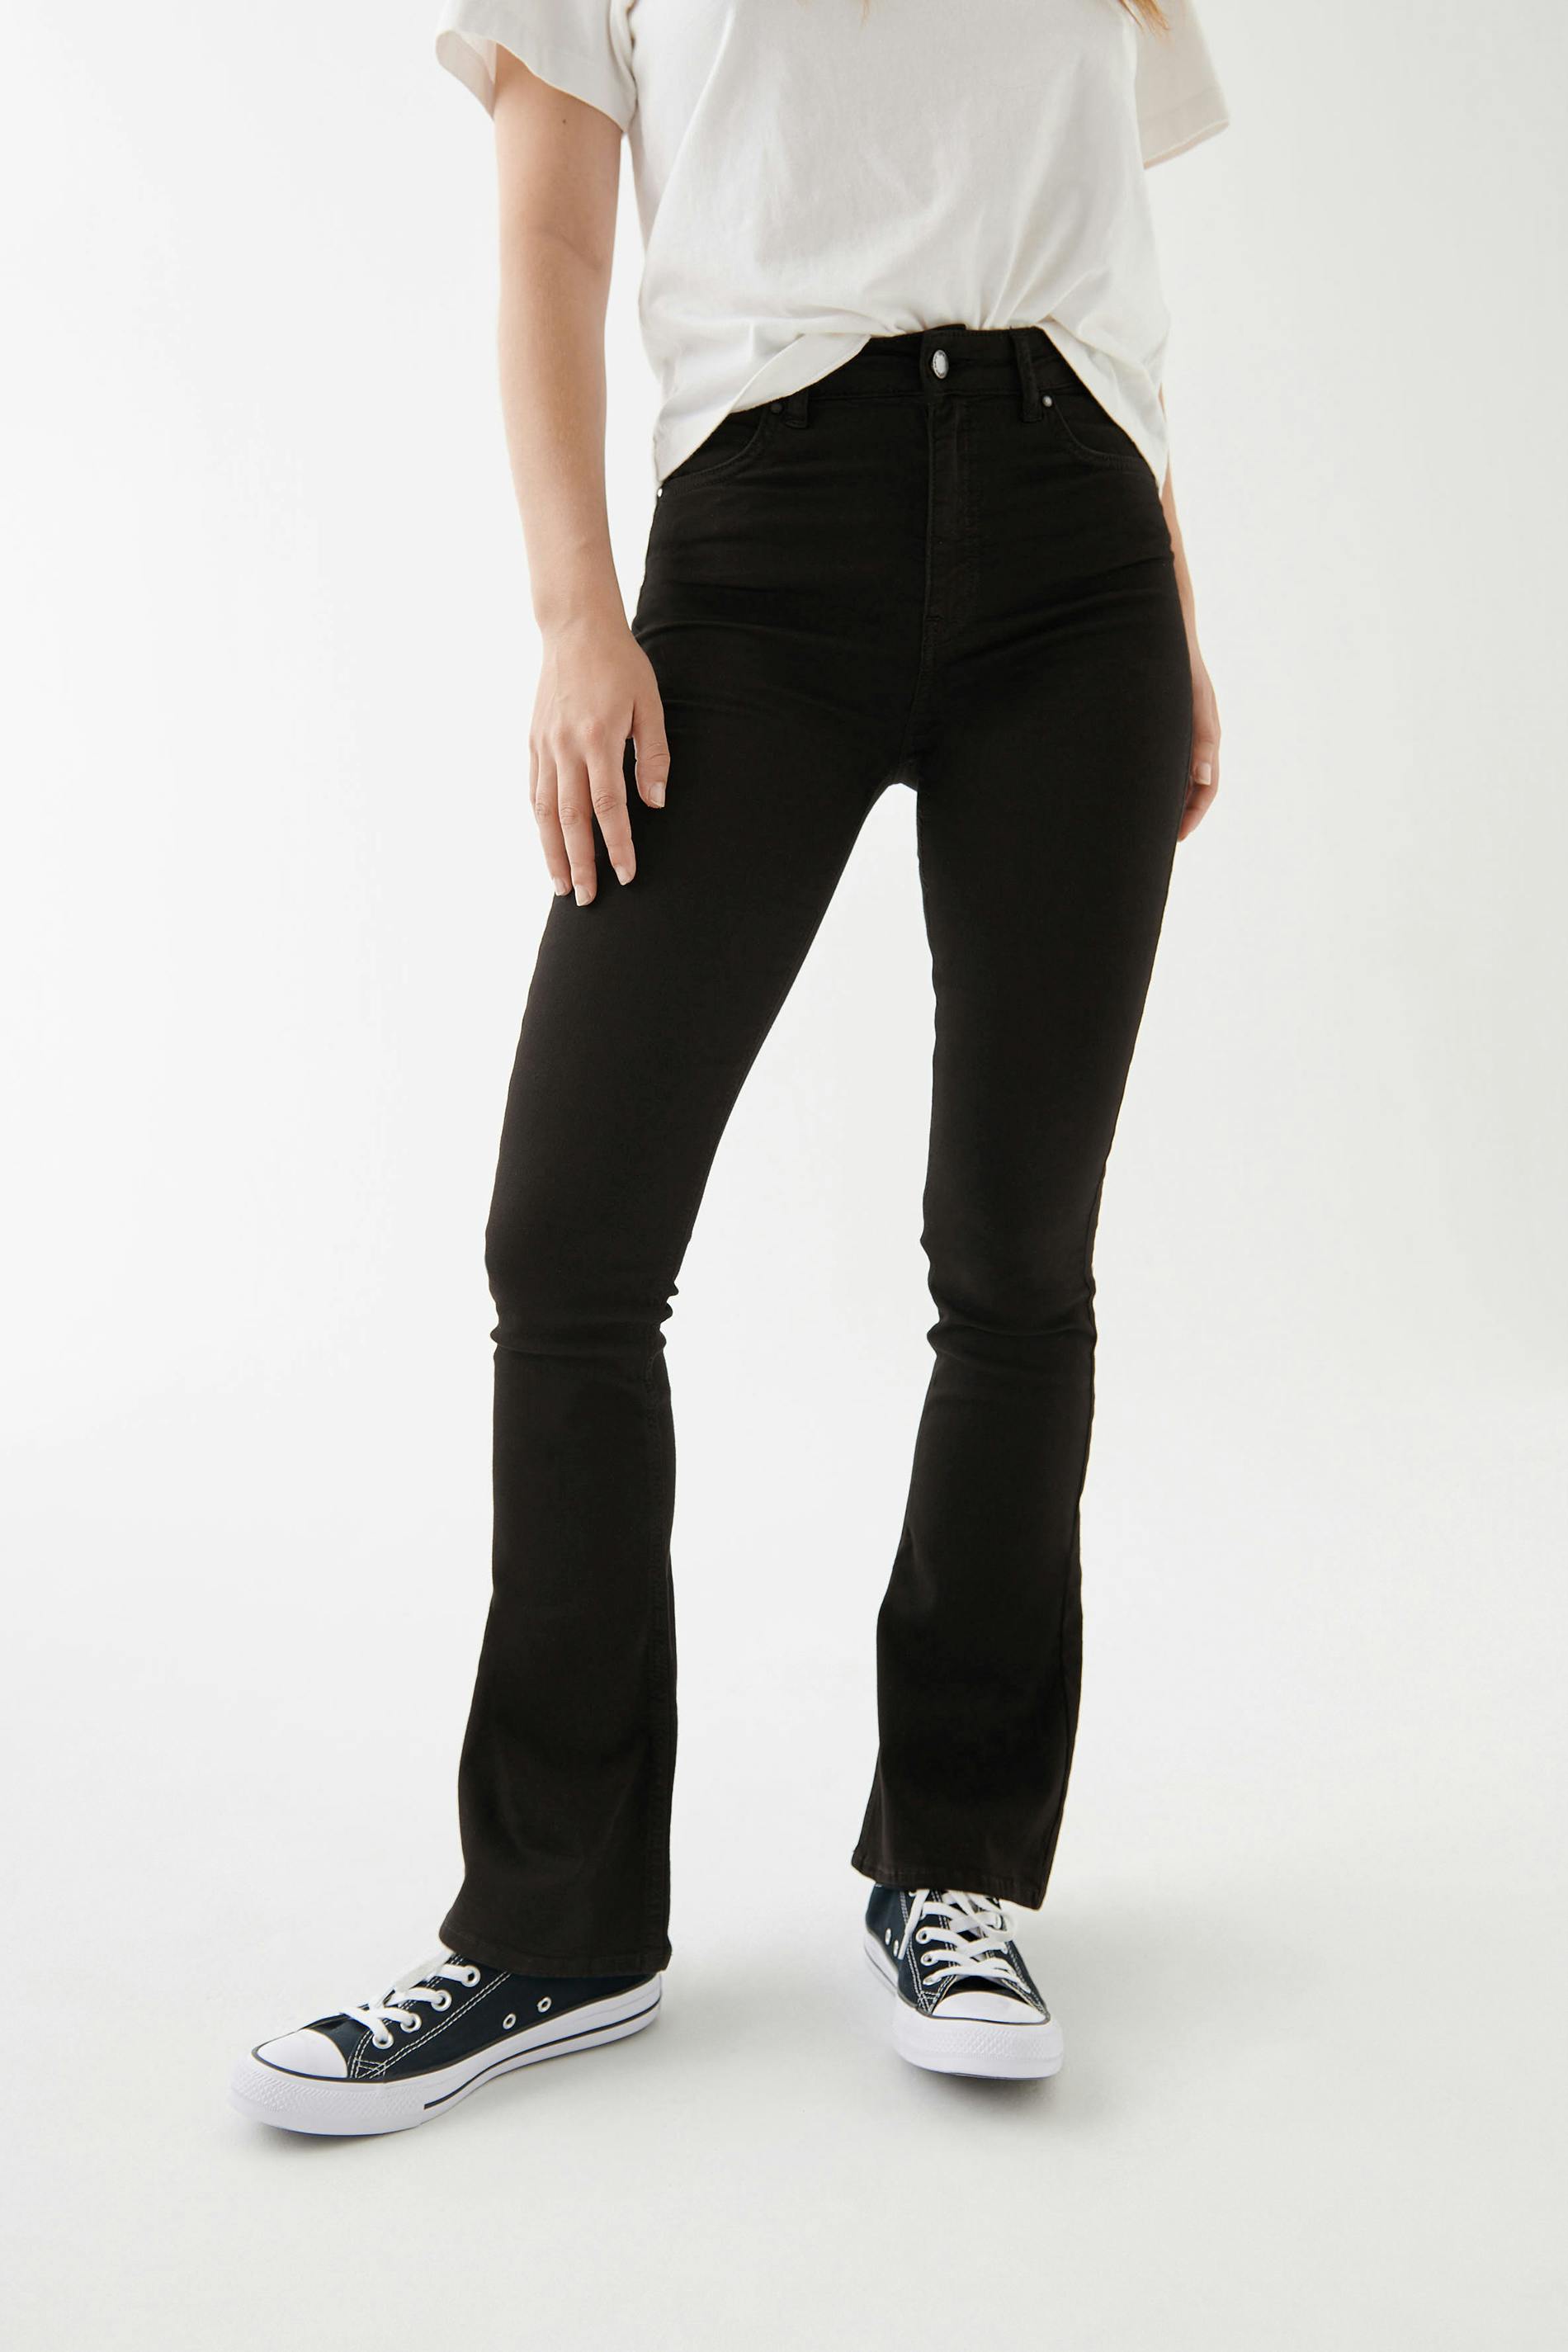 black trouser jeans